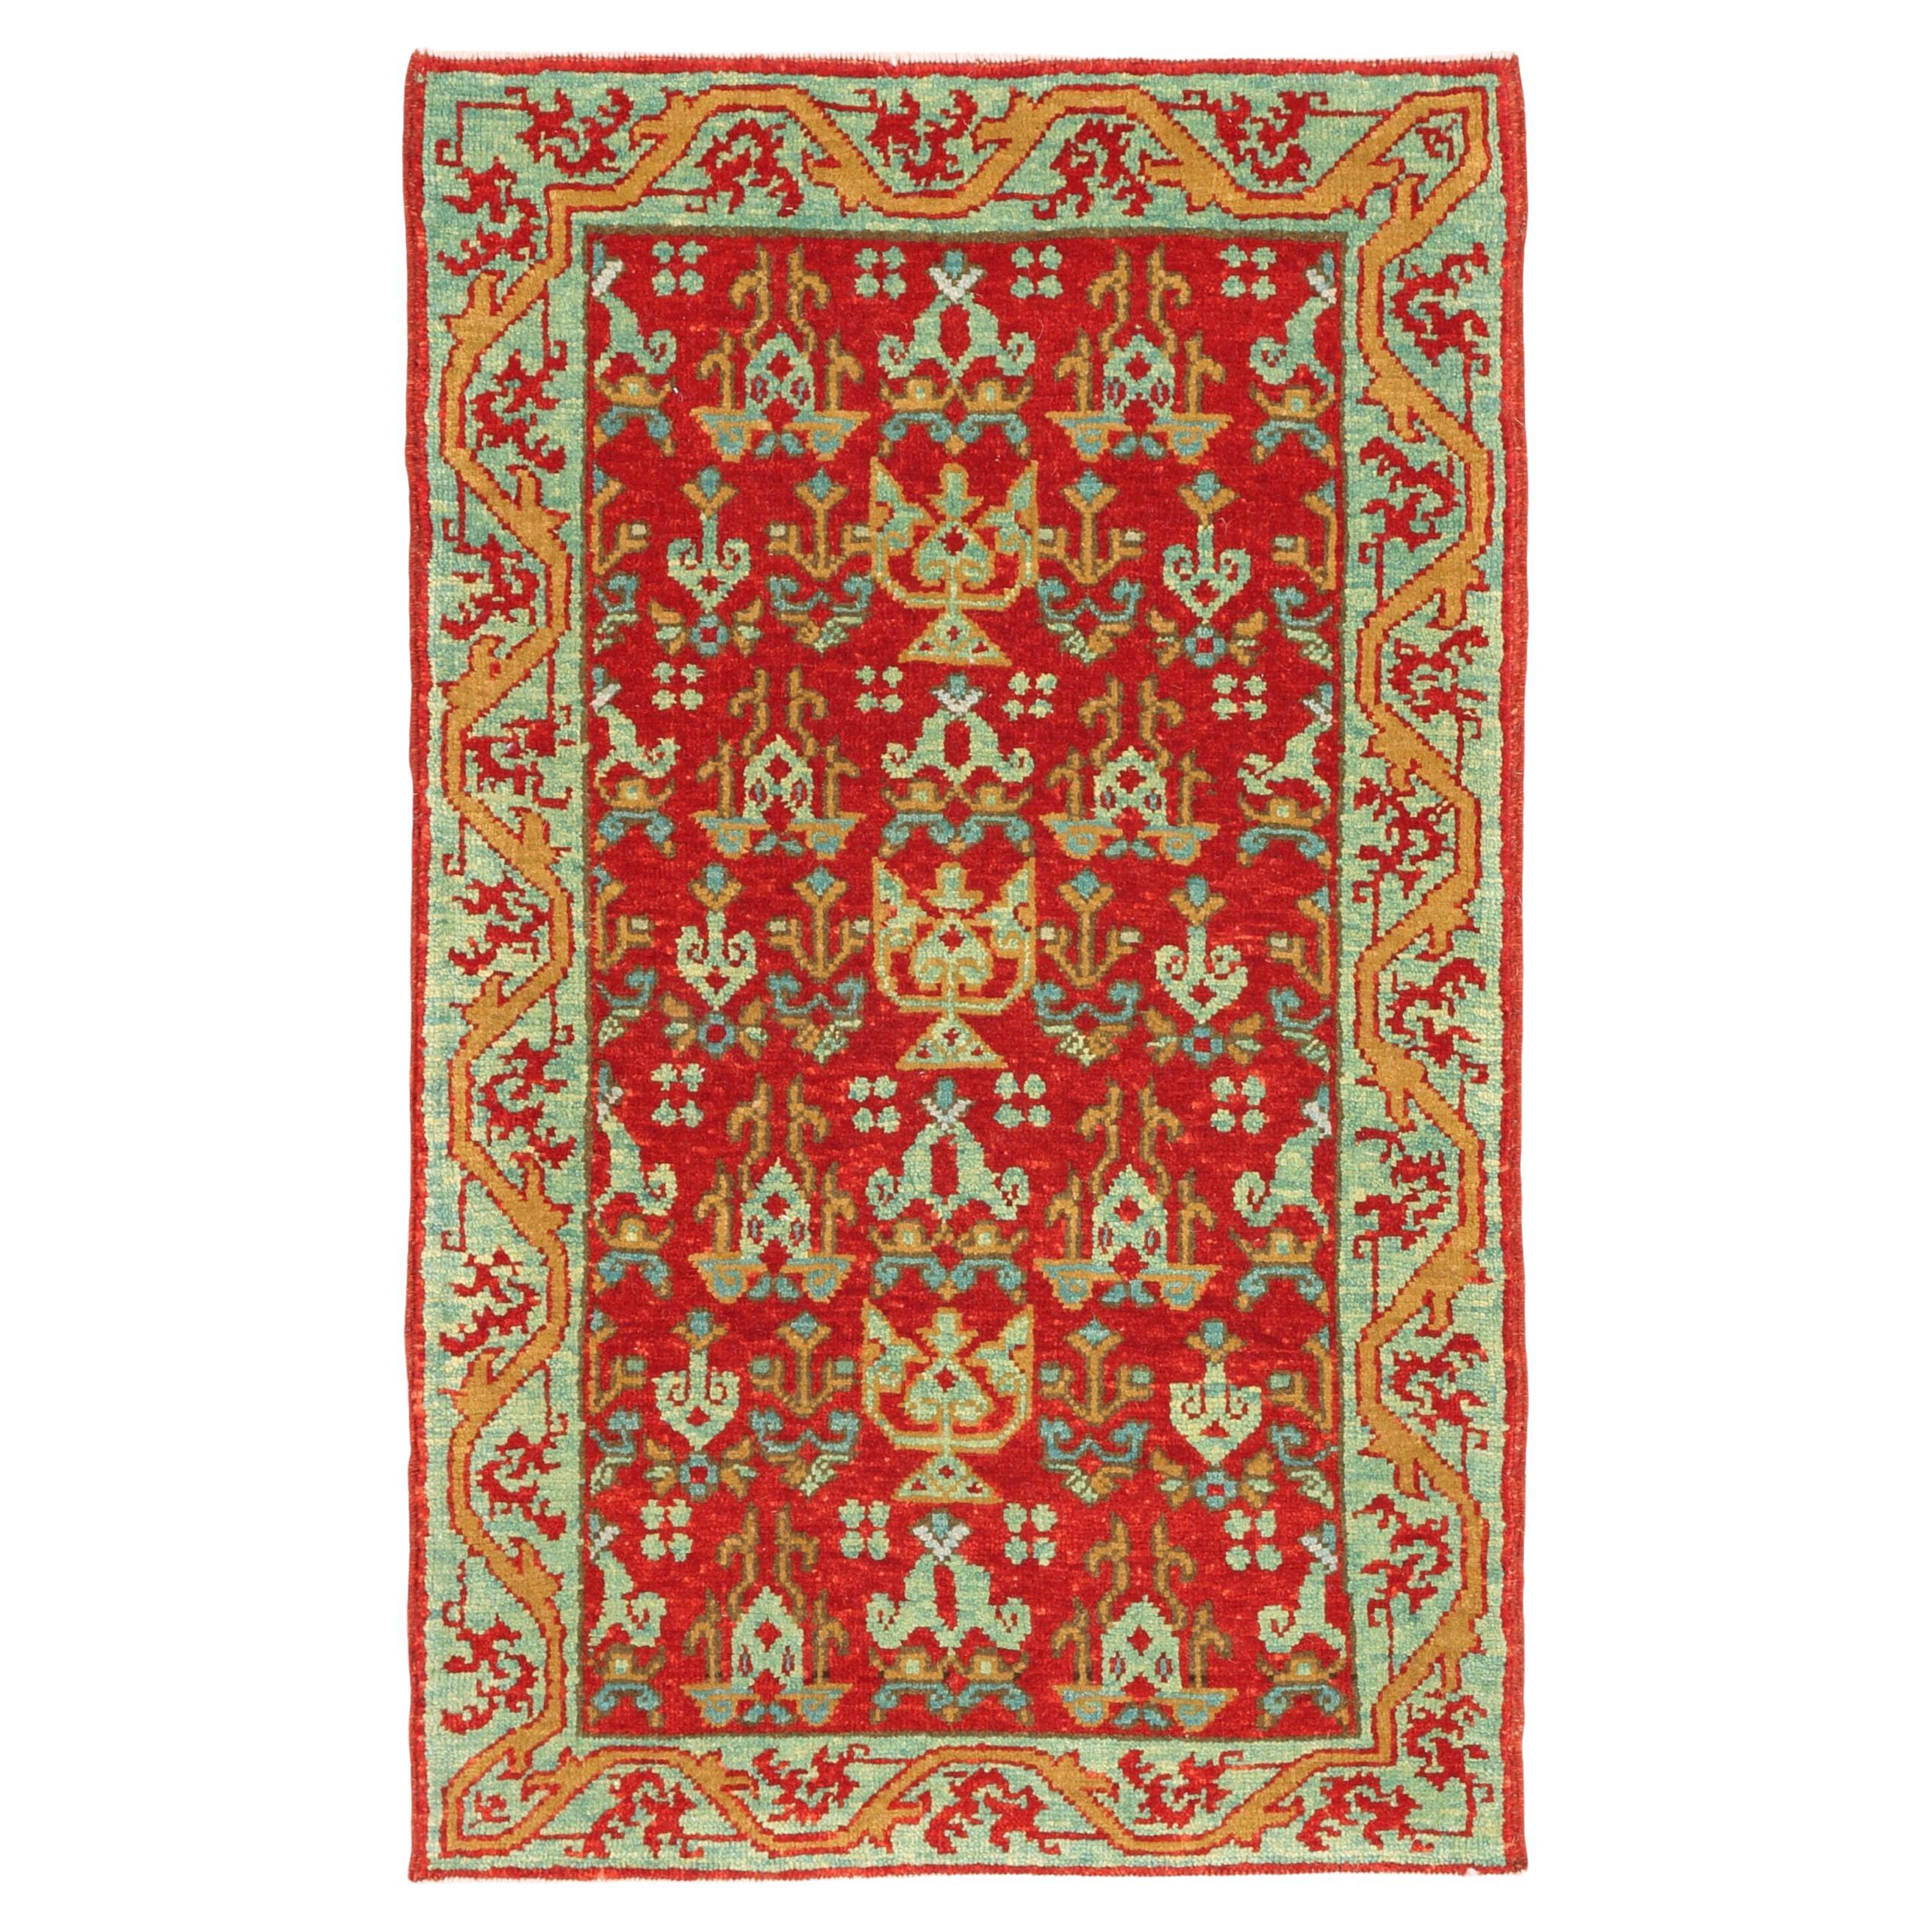 Ararat Rugs Mamluk Wagireh Rug with Candelabra Elems Revival Carpet Natural Dyed